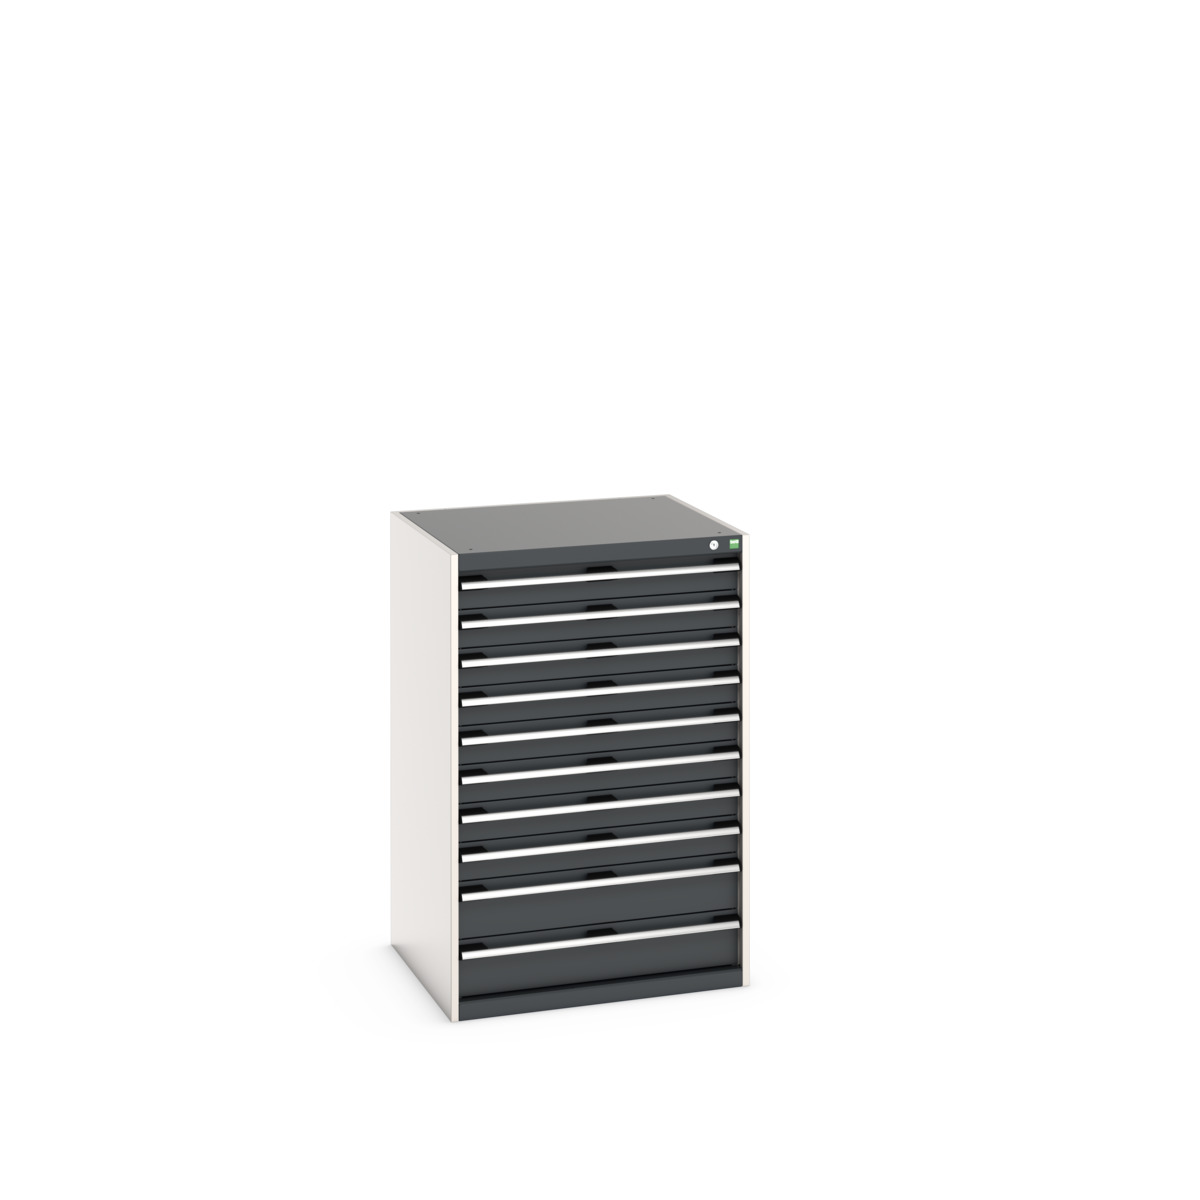 40028037. - cubio drawer cabinet 